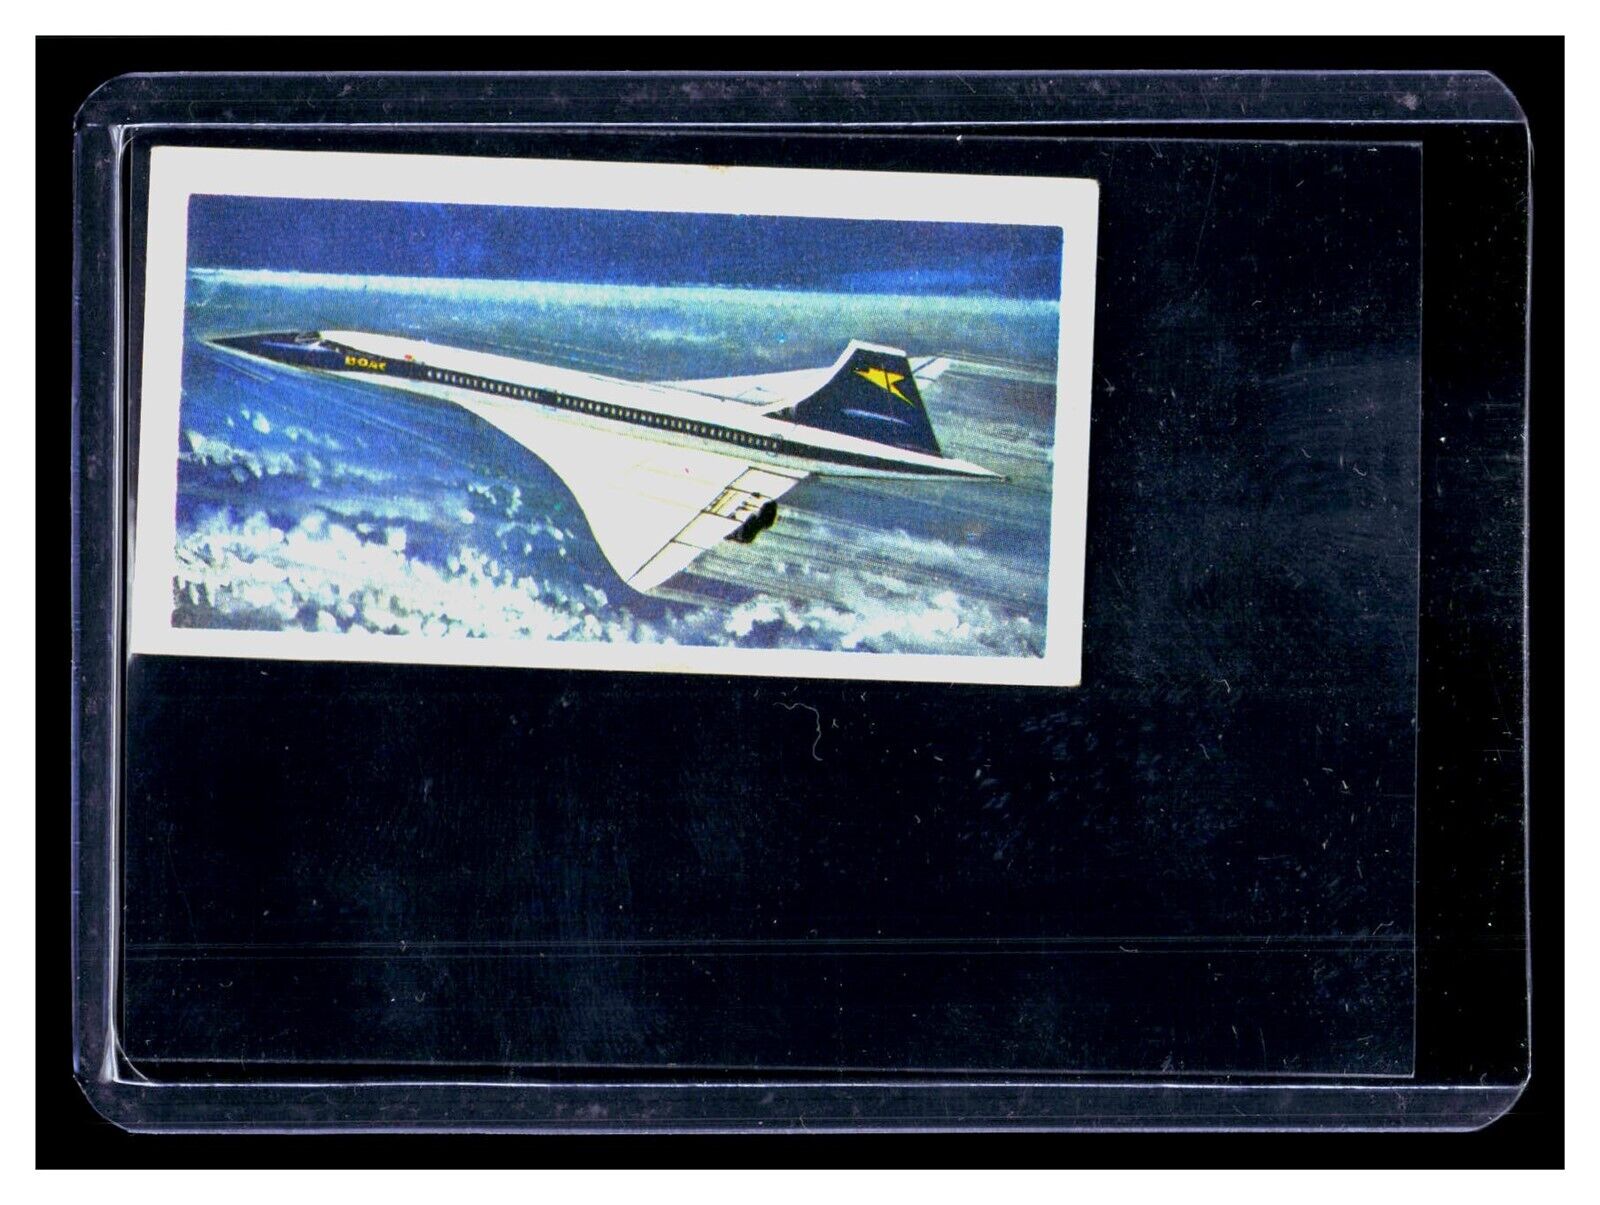 BAC/Aerospatiale Concorde - Brooke Bond History Of Aviation